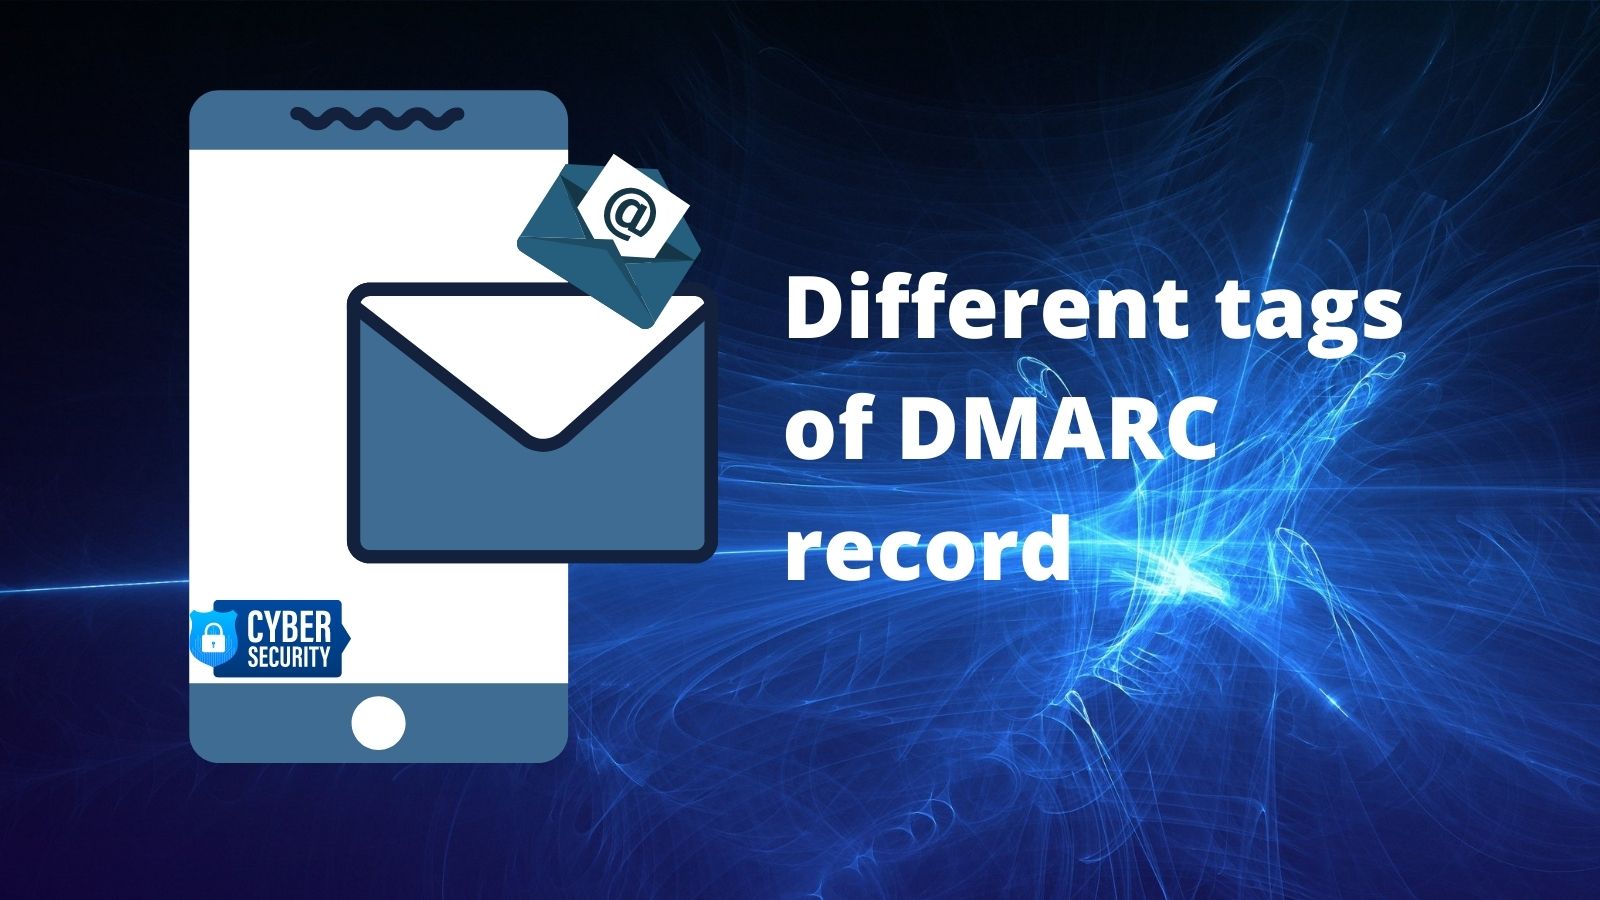 DKIM, DKIM record, DMARC, DMARC benefits, DMARC Record, DMARC Reject Policy, Email authentication